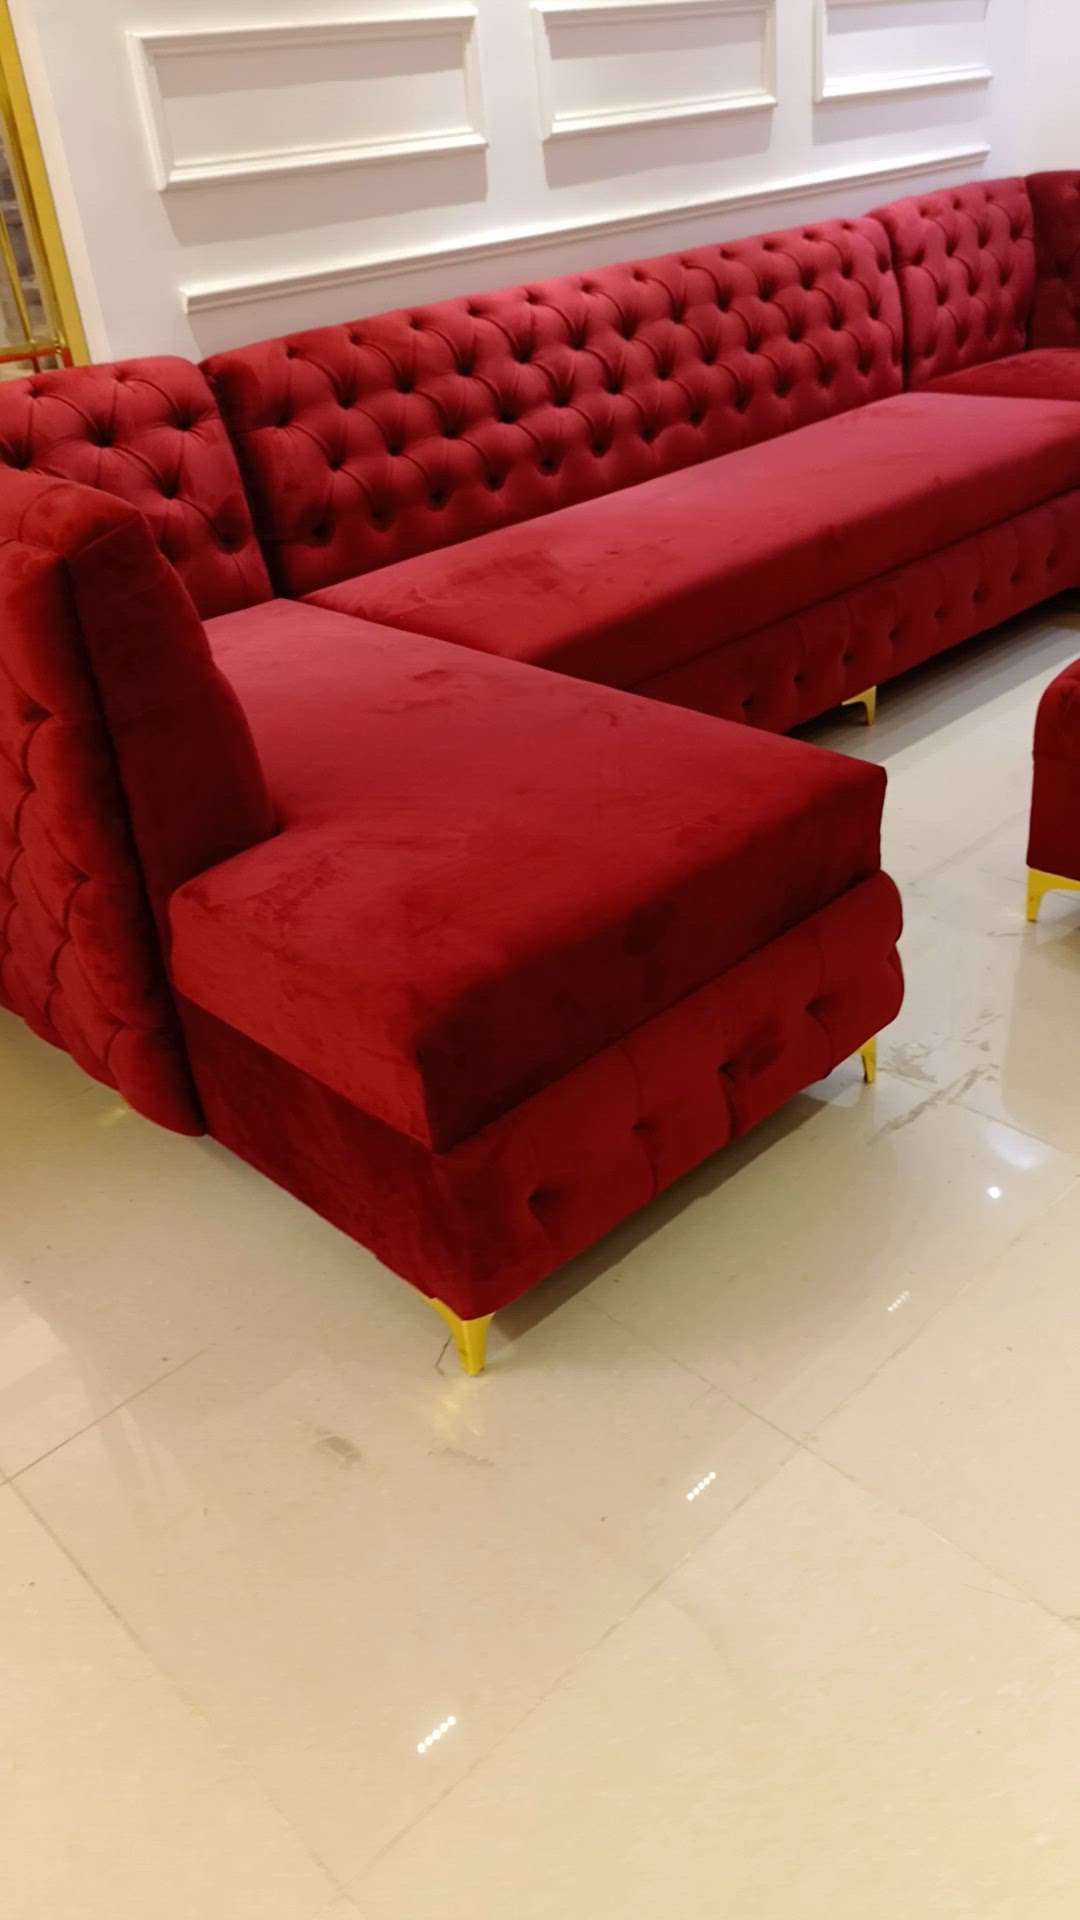 Hasan Zaidi new sofa design banate hain sofa repair karte Hain Delhi NCR kam karte
7060390817
call me